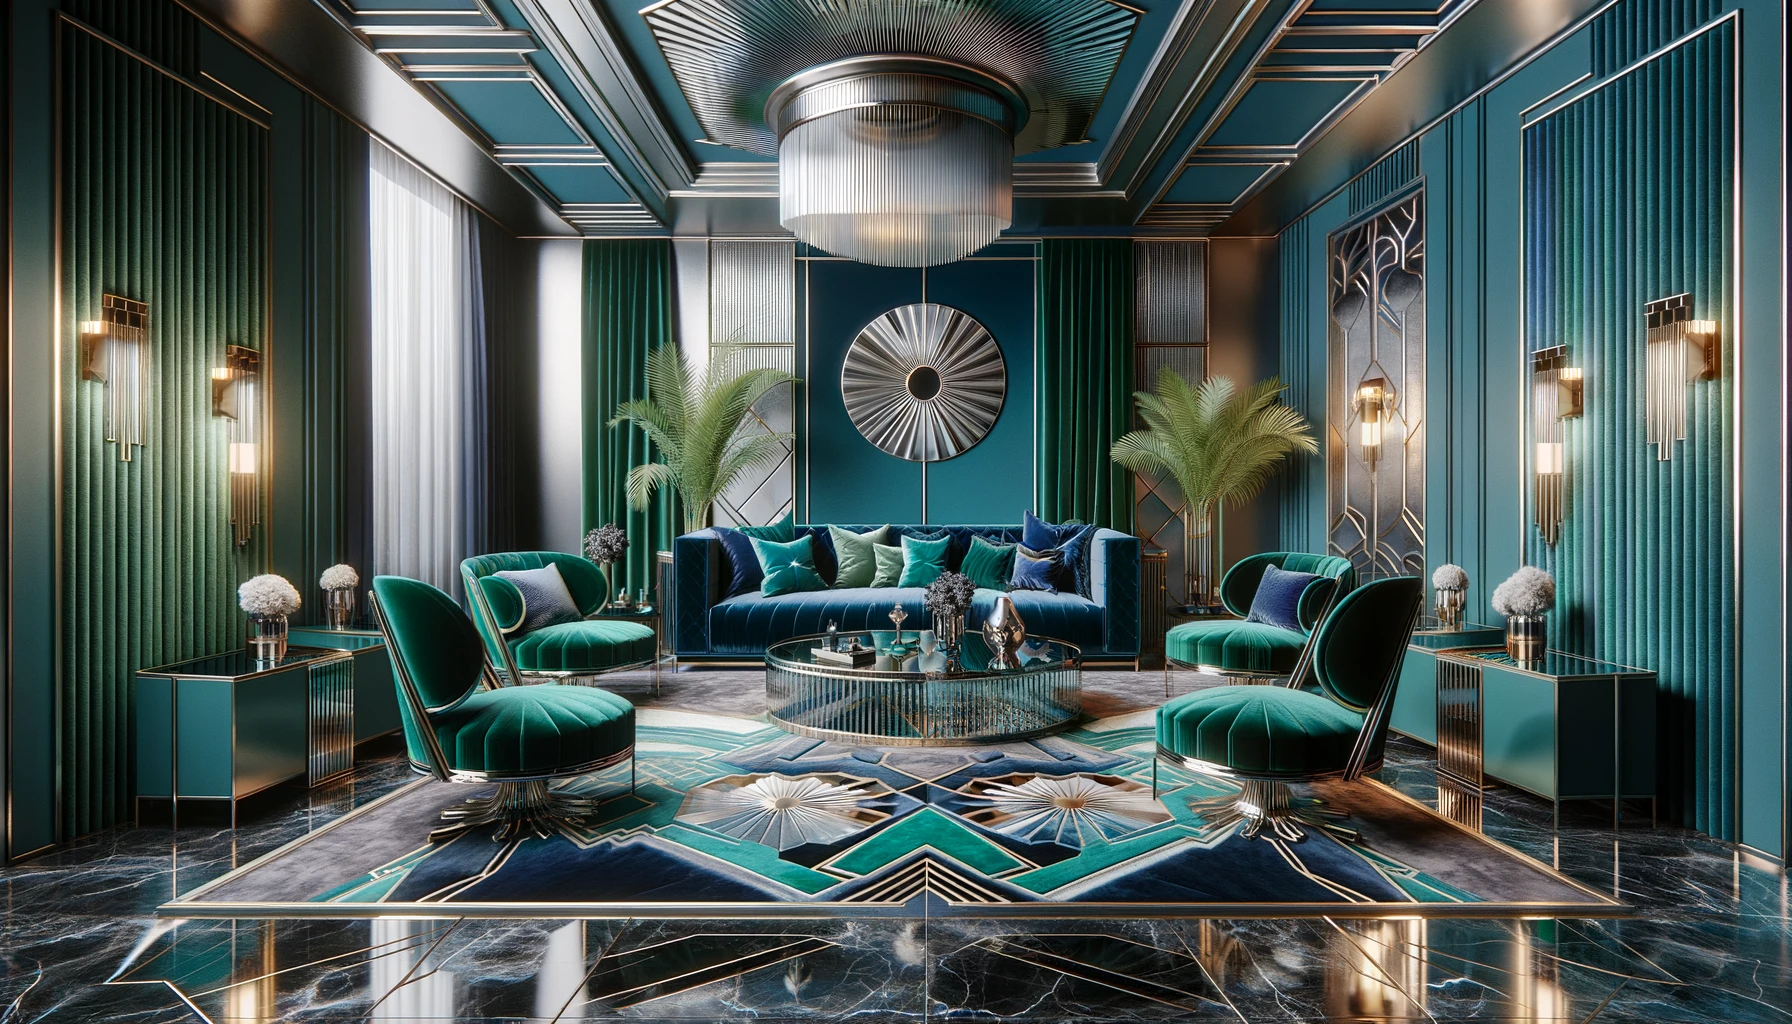 Luxurious art deco style lounge room interior design.